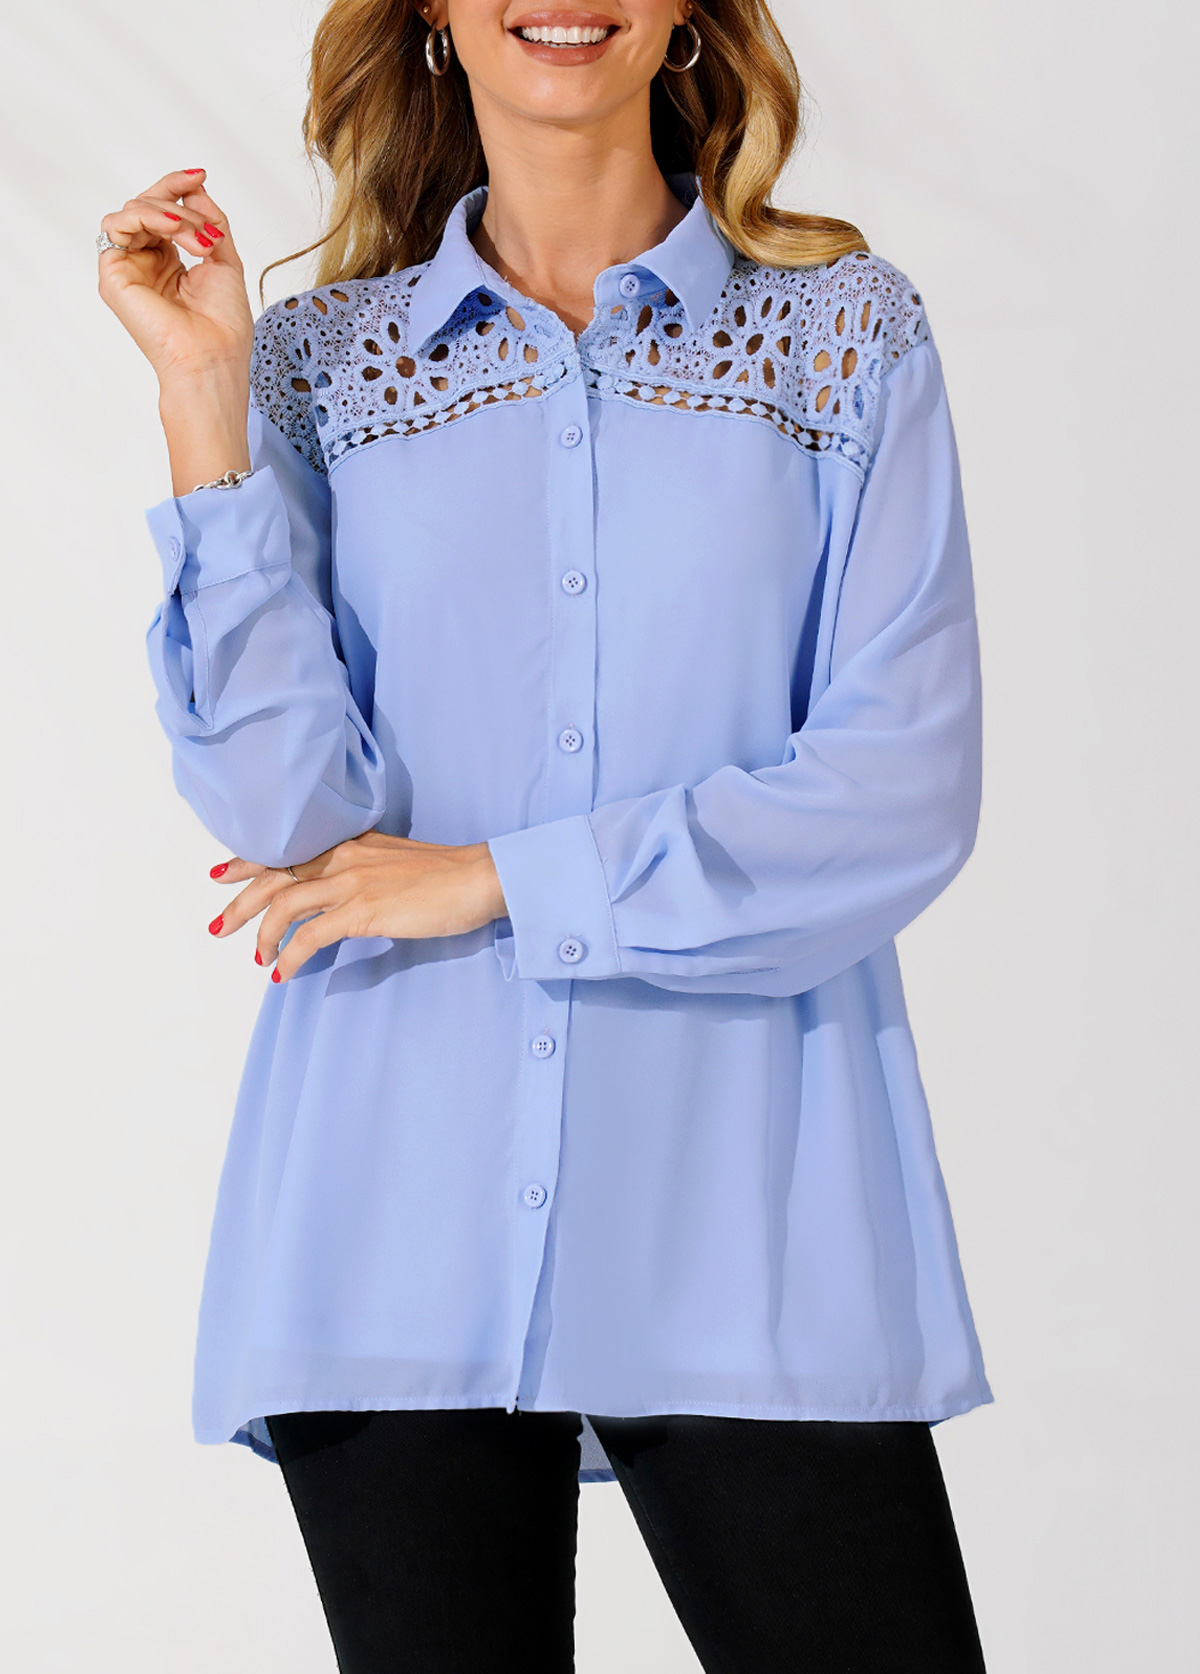 Lace Trim Turndown Collar Blue Long Sleeve Blouse